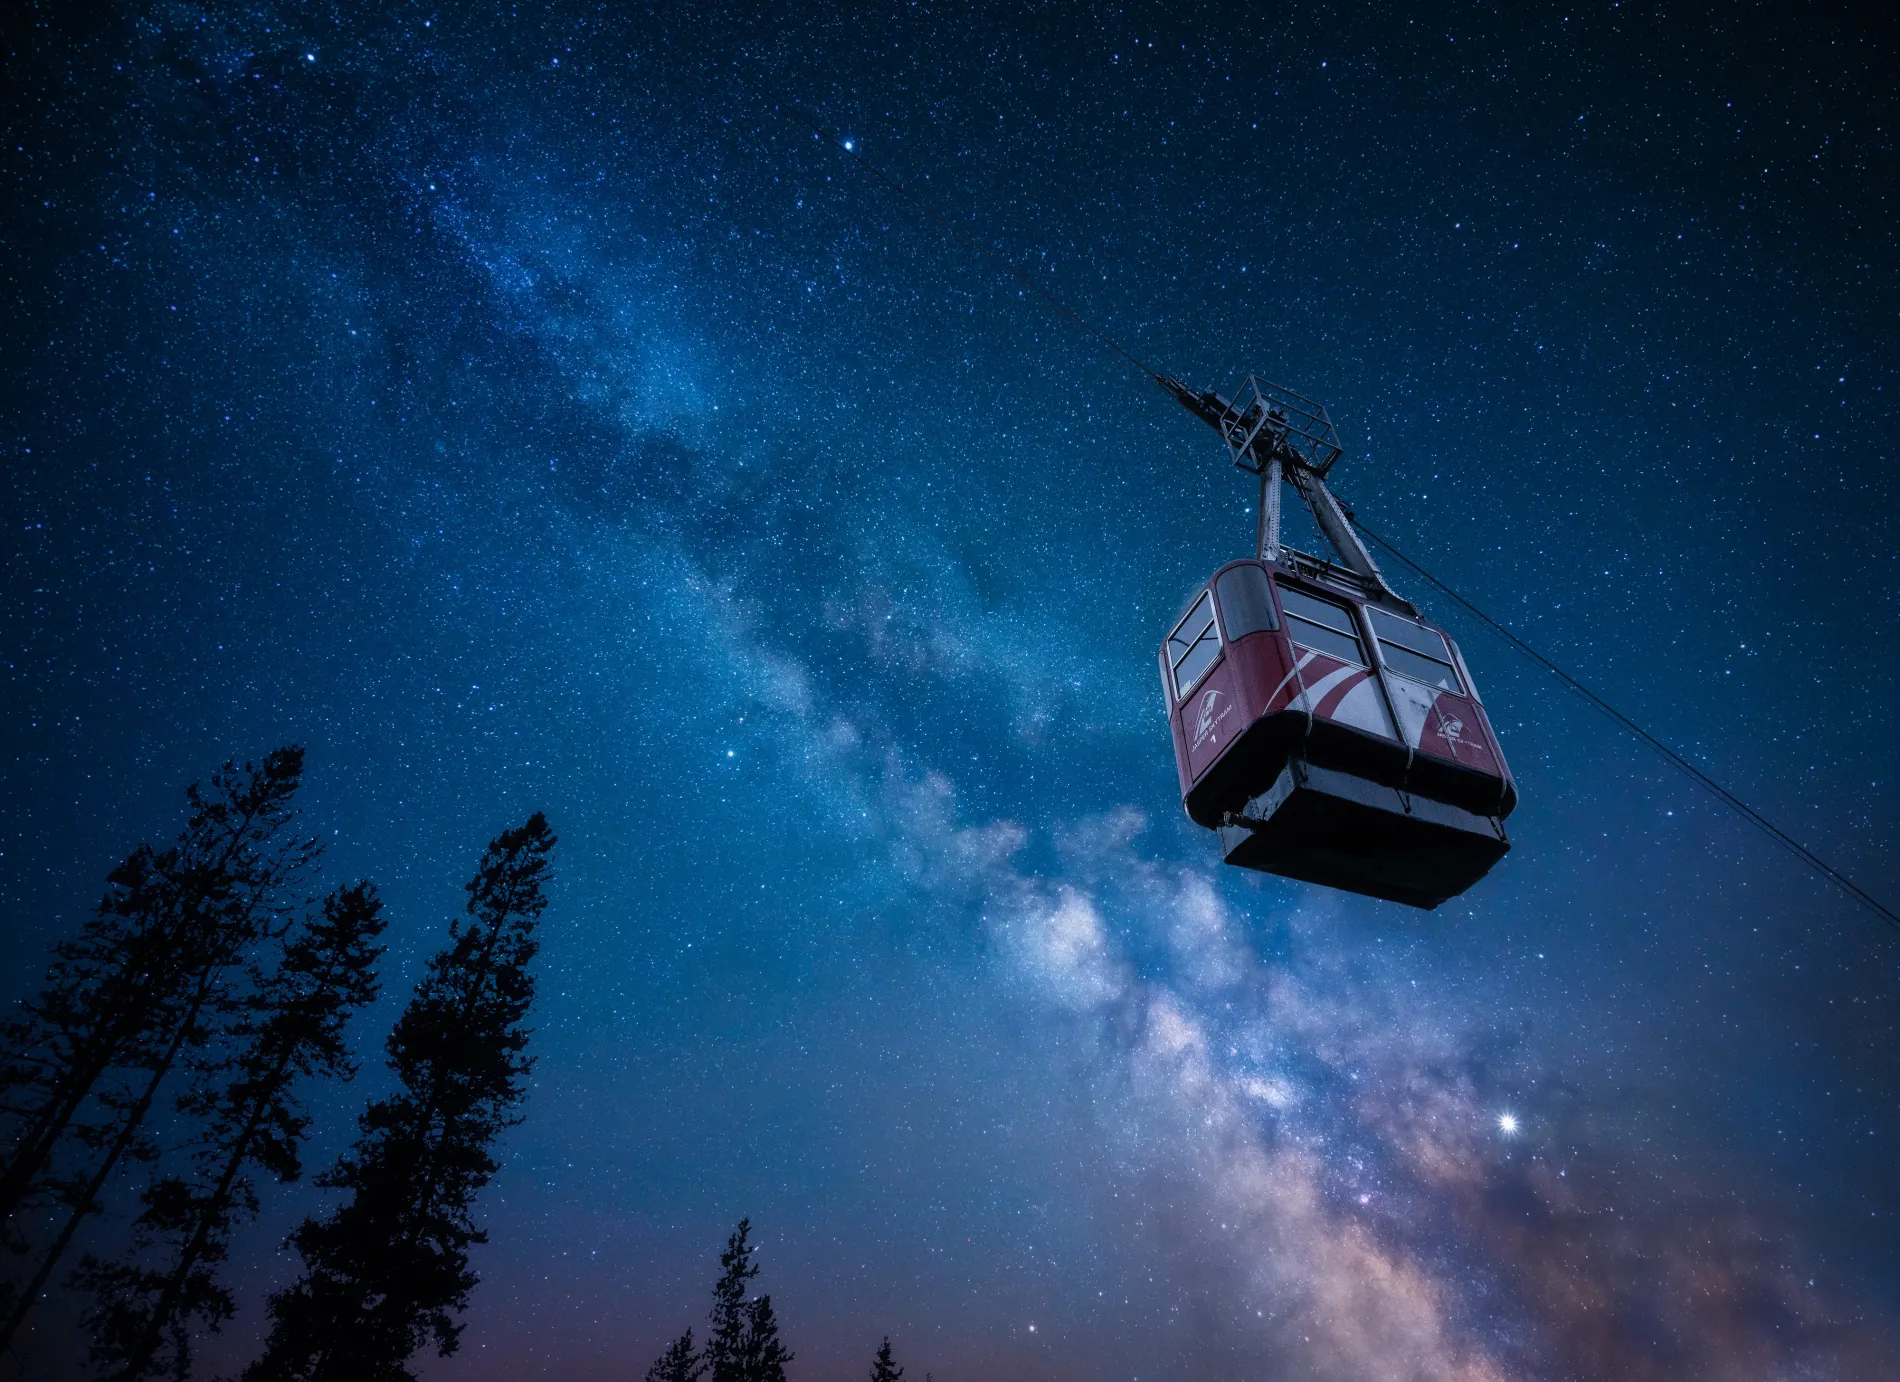 Gondola rising in starry night sky